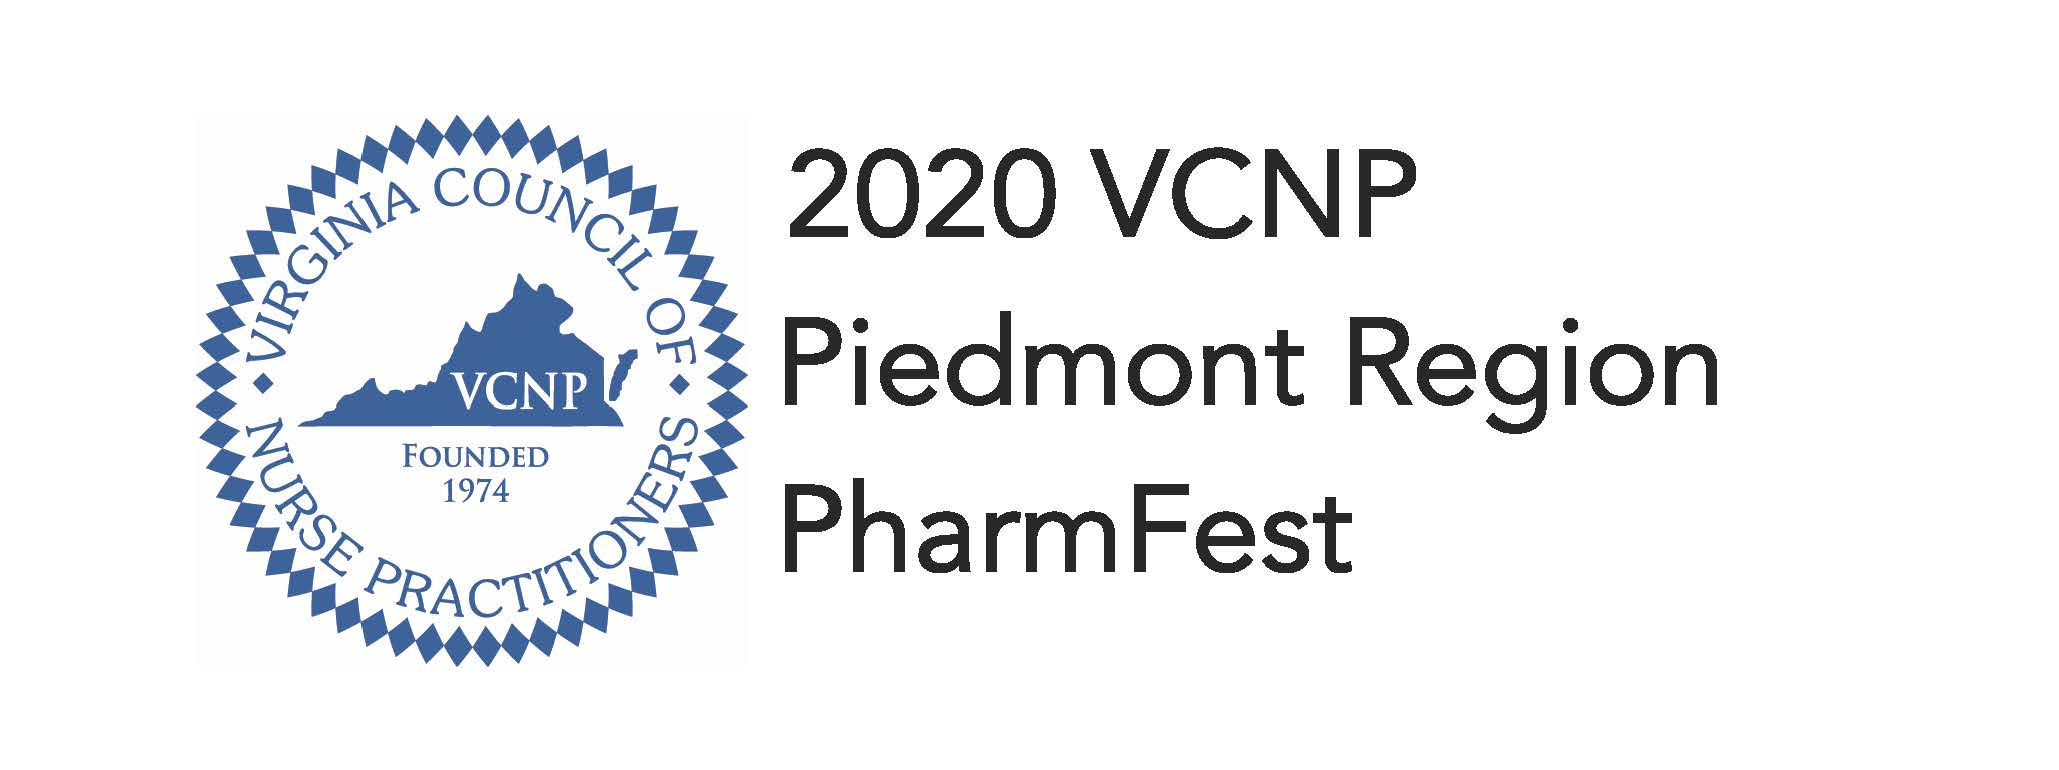 2020 VCNP Piedmont Pharmfest,
                        January 18 - January 18, 2020
                        , UVA Darden School of Business Auditorium
                        Charlottesviille
                        VA